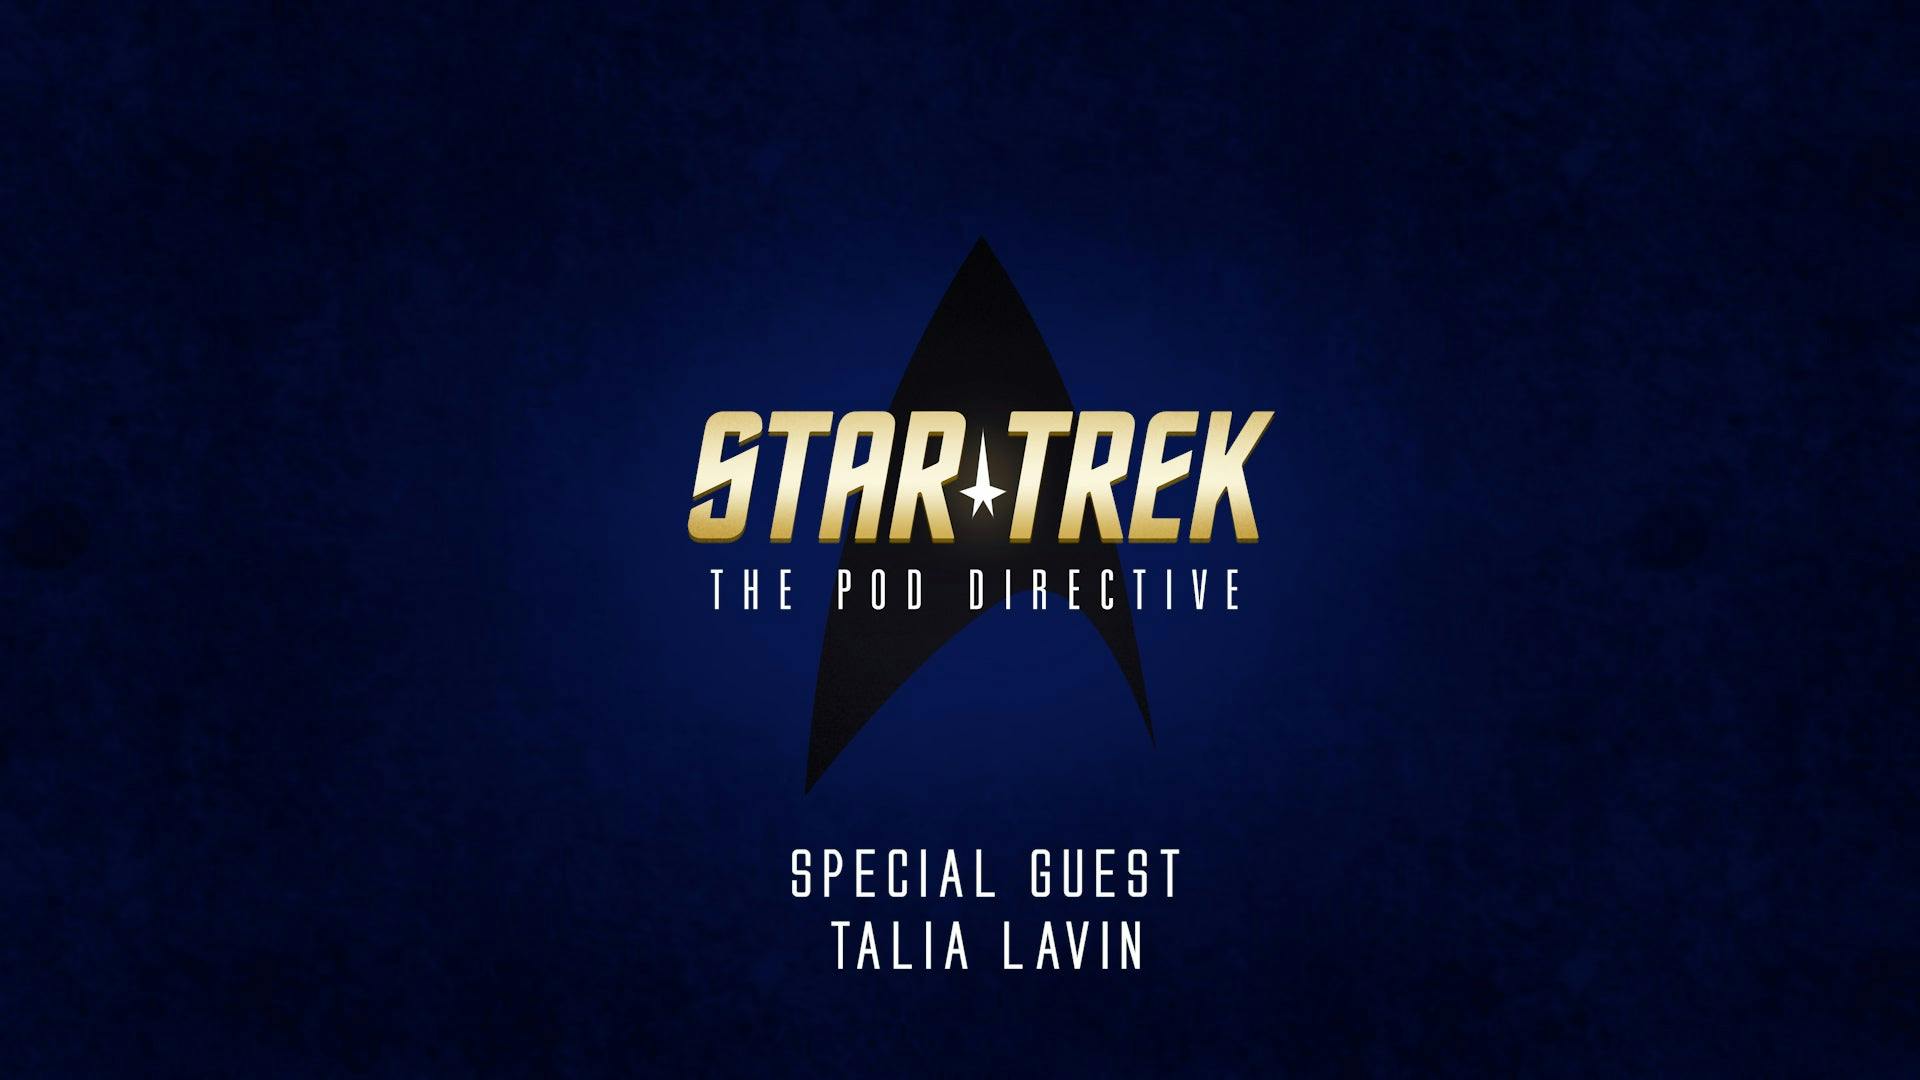 Star Trek: The Pod Directive with Talia Lavin